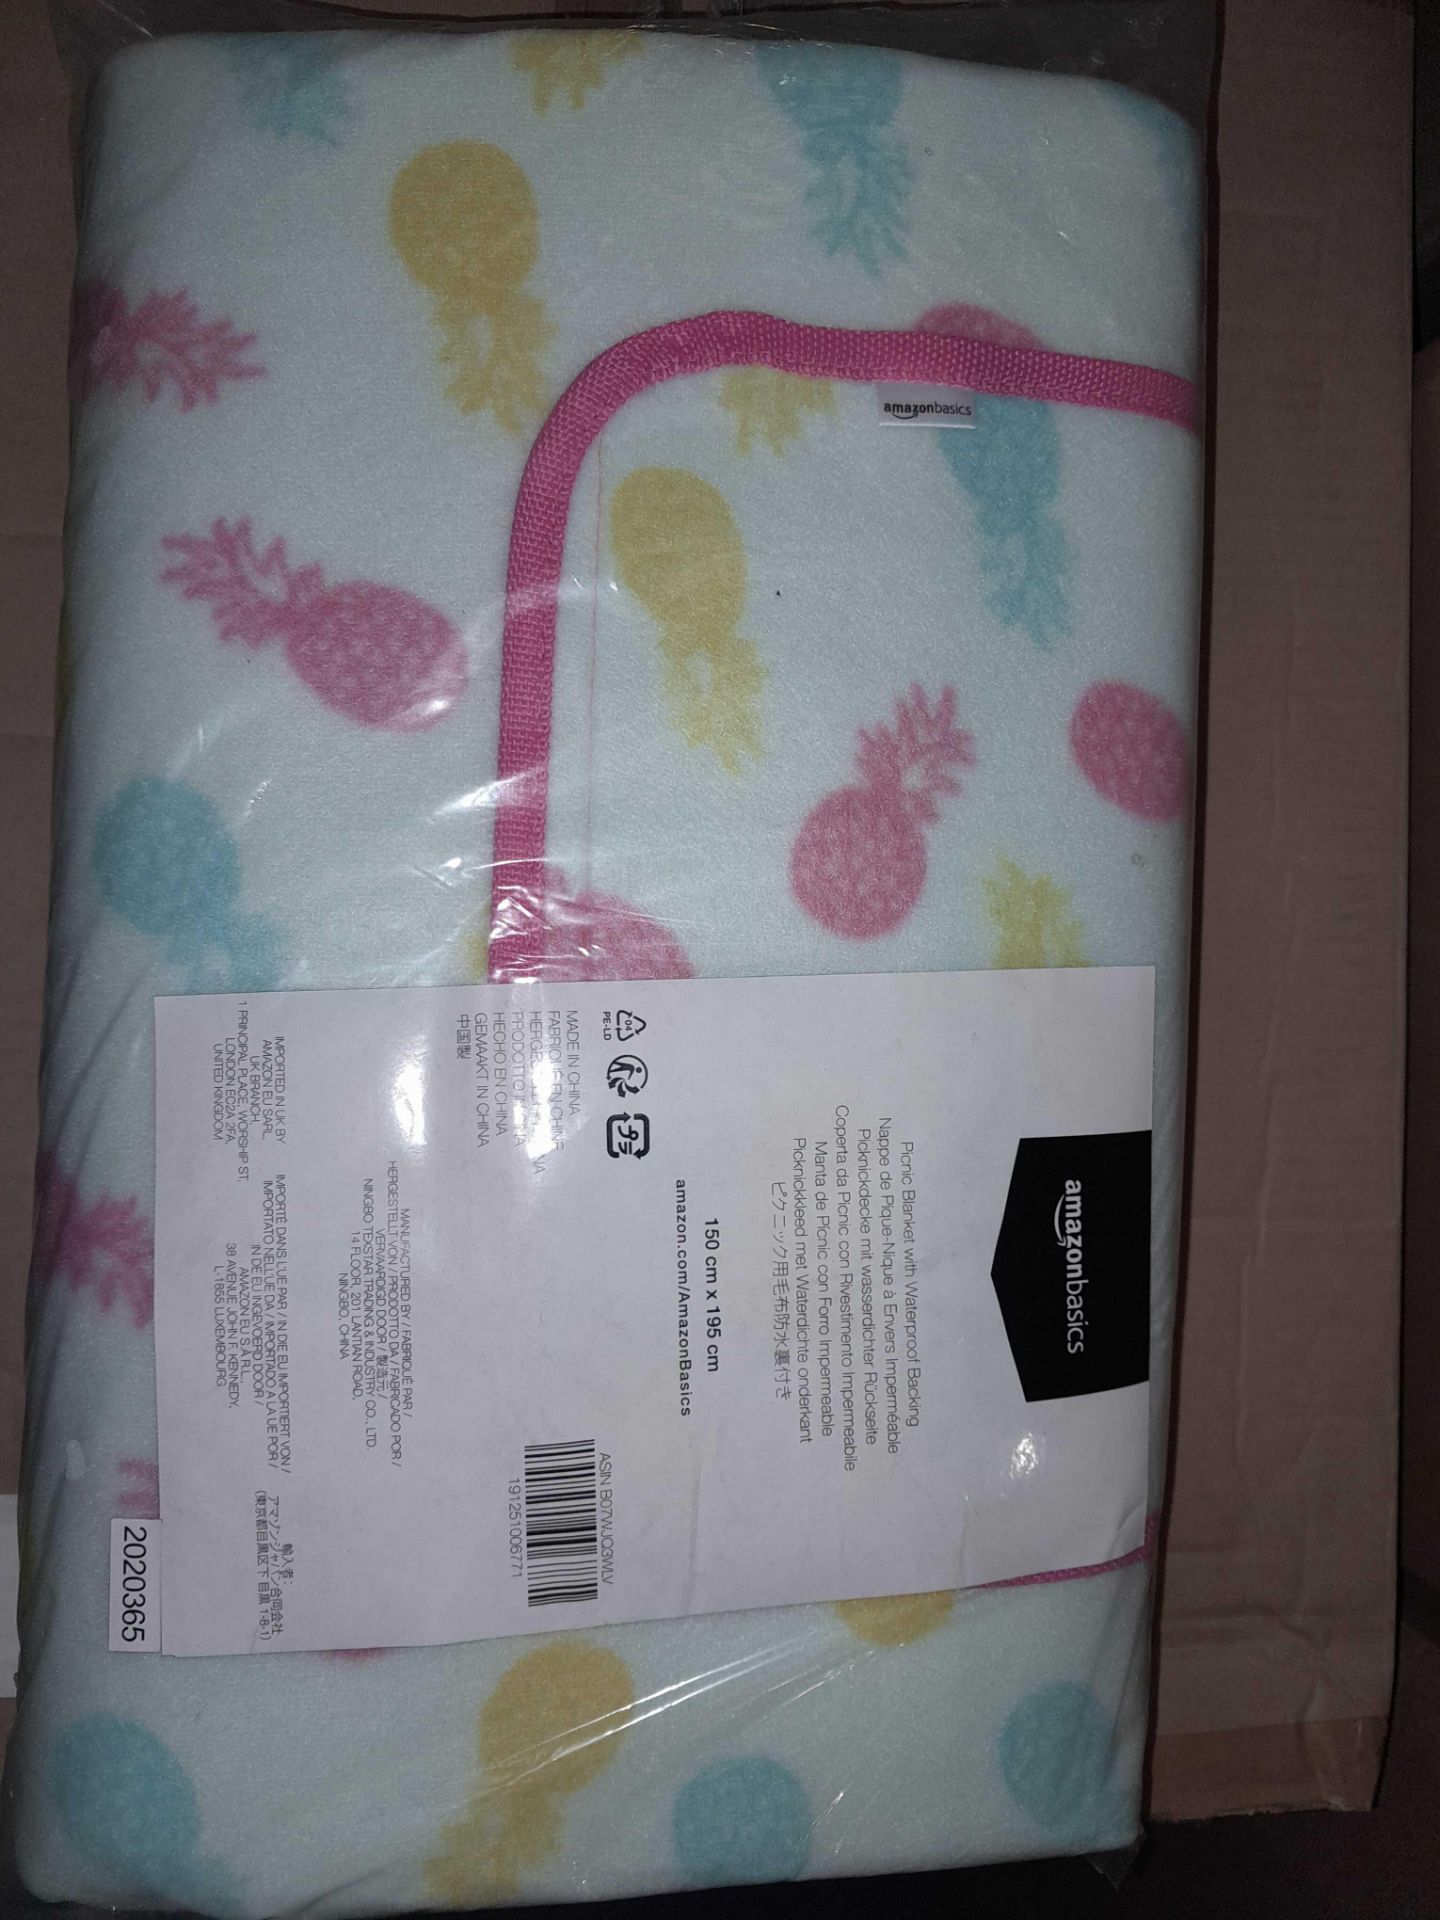 RRP £60 Brand New Factory Sealed Amazon Basics Picnic Blankets X4 - Image 2 of 2